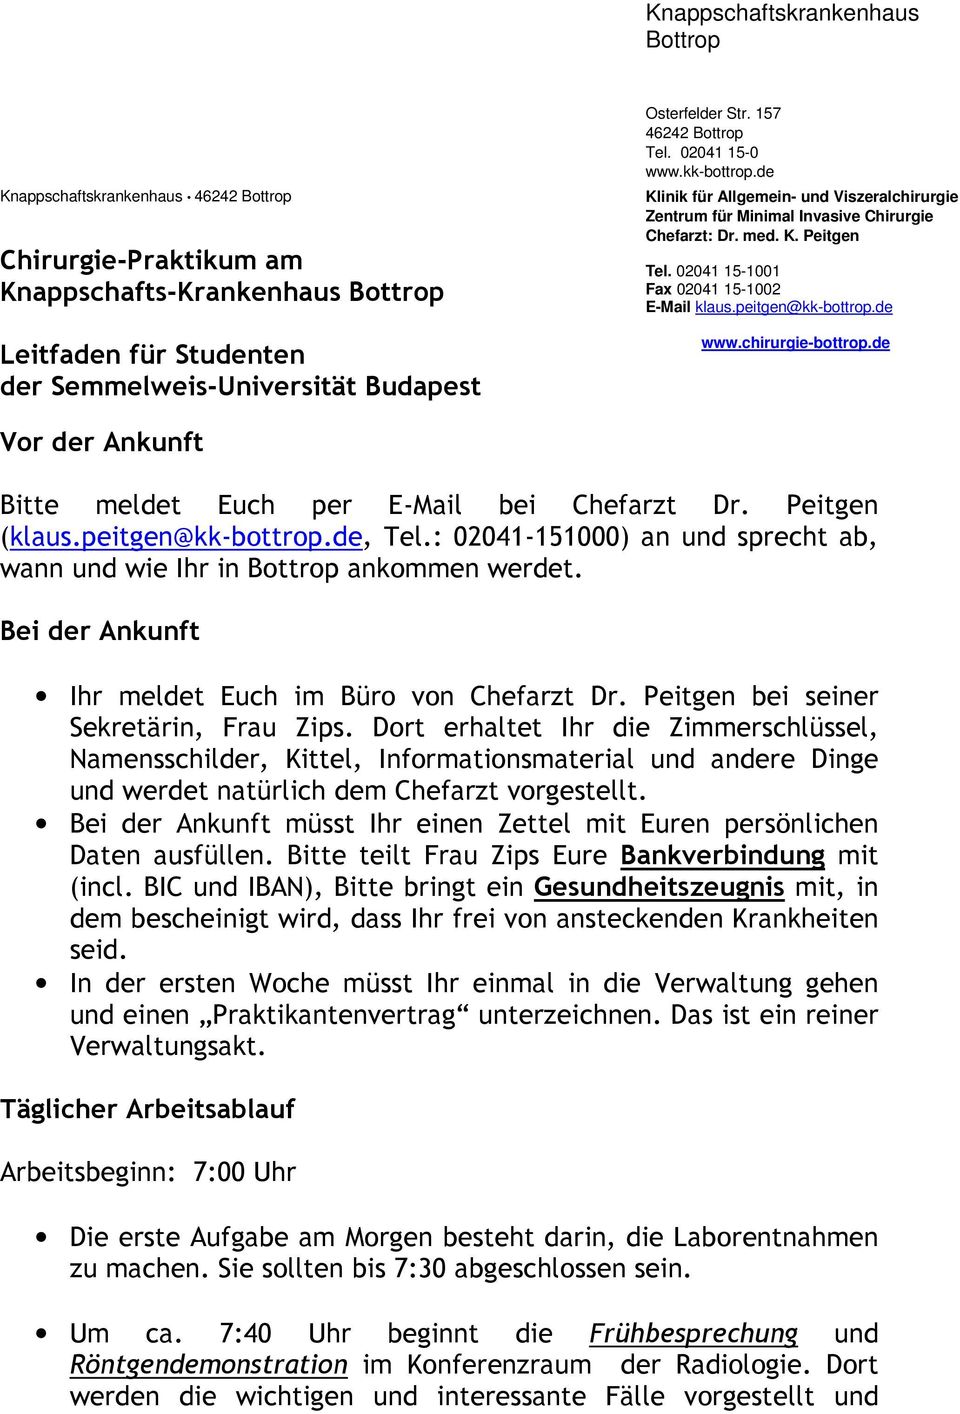 02041 15-1001 Fax 02041 15-1002 E-Mail klaus.peitgen@kk-bottrop.de www.chirurgie-bottrop.de Vor der Ankunft Bitte meldet Euch per E-Mail bei Chefarzt Dr. Peitgen (klaus.peitgen@kk-bottrop.de, Tel.